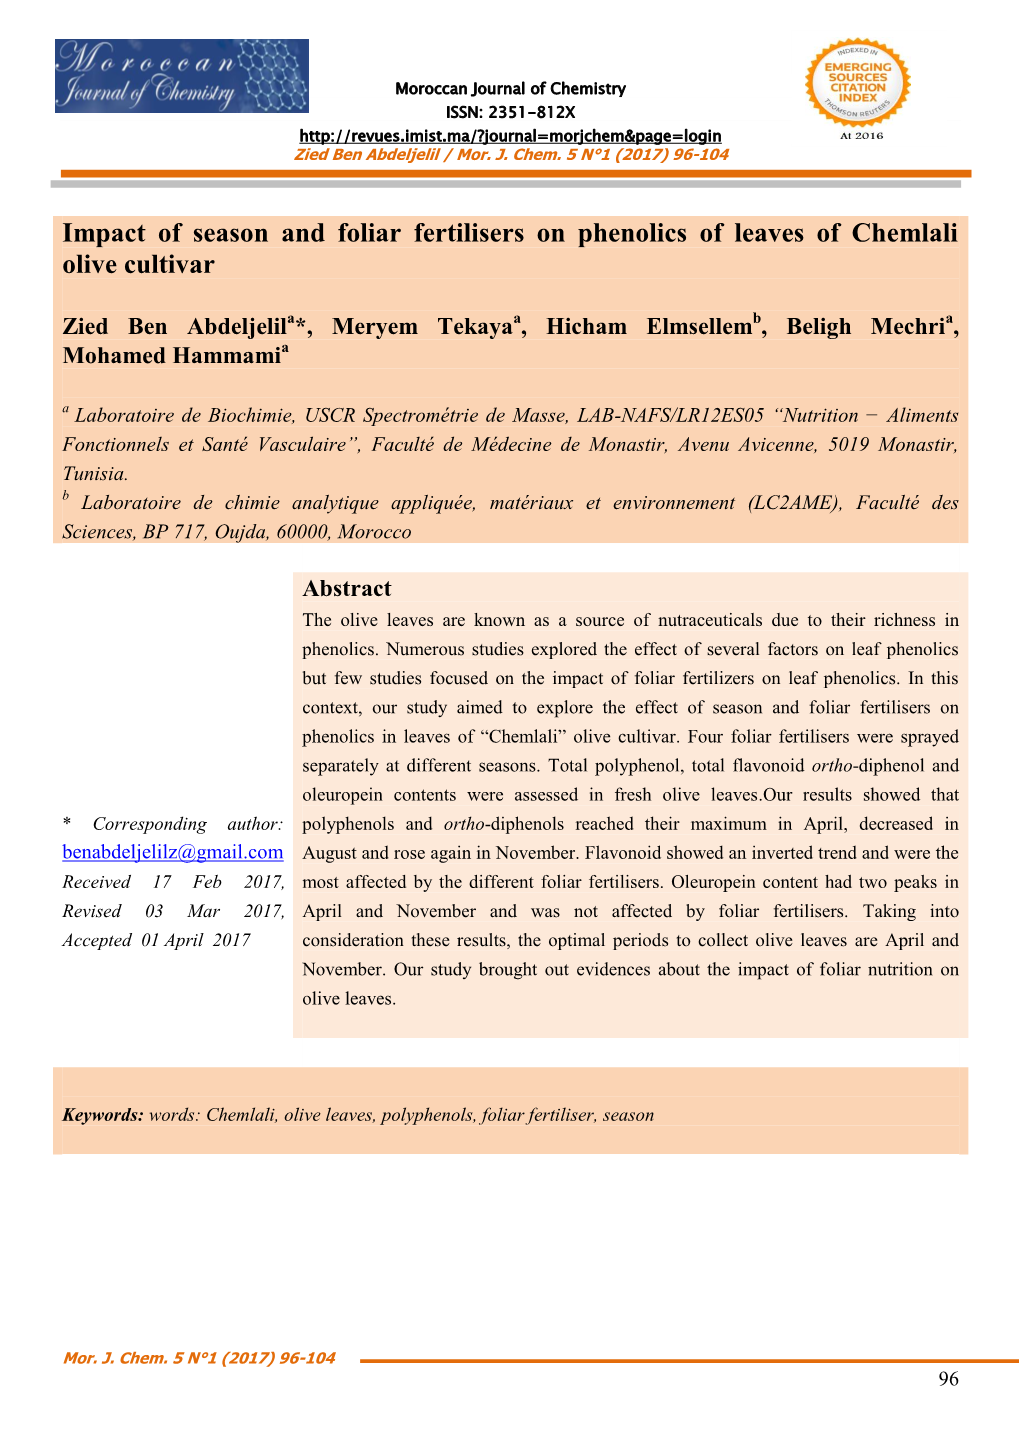 Impact of Season and Foliar Fertilisers on Phenolics of Leaves of Chemlali Olive Cultivar